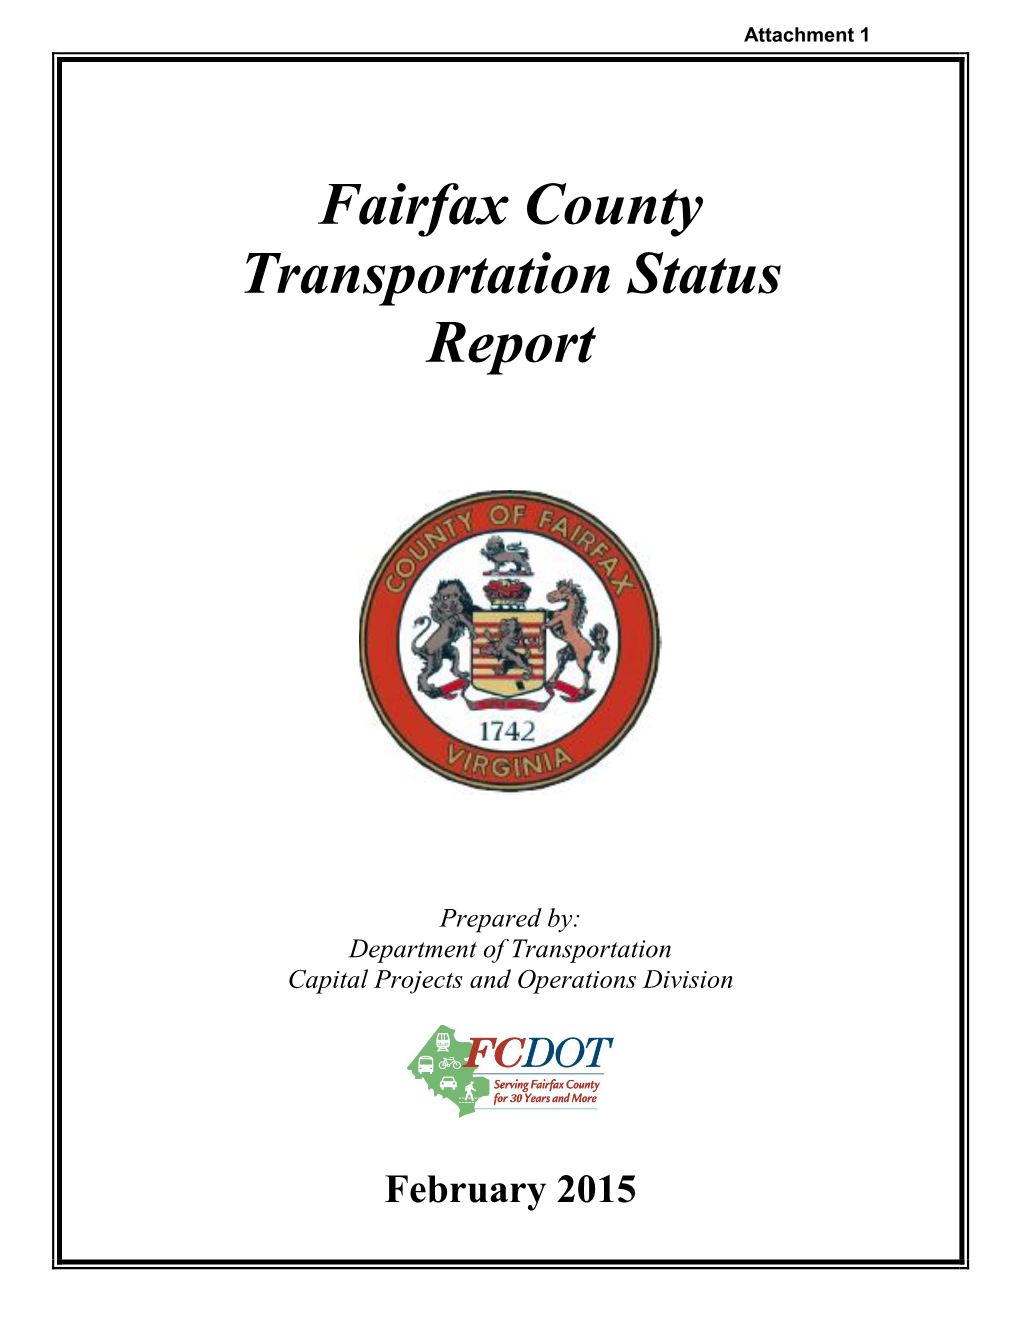 Fairfax County Transportation Status Report